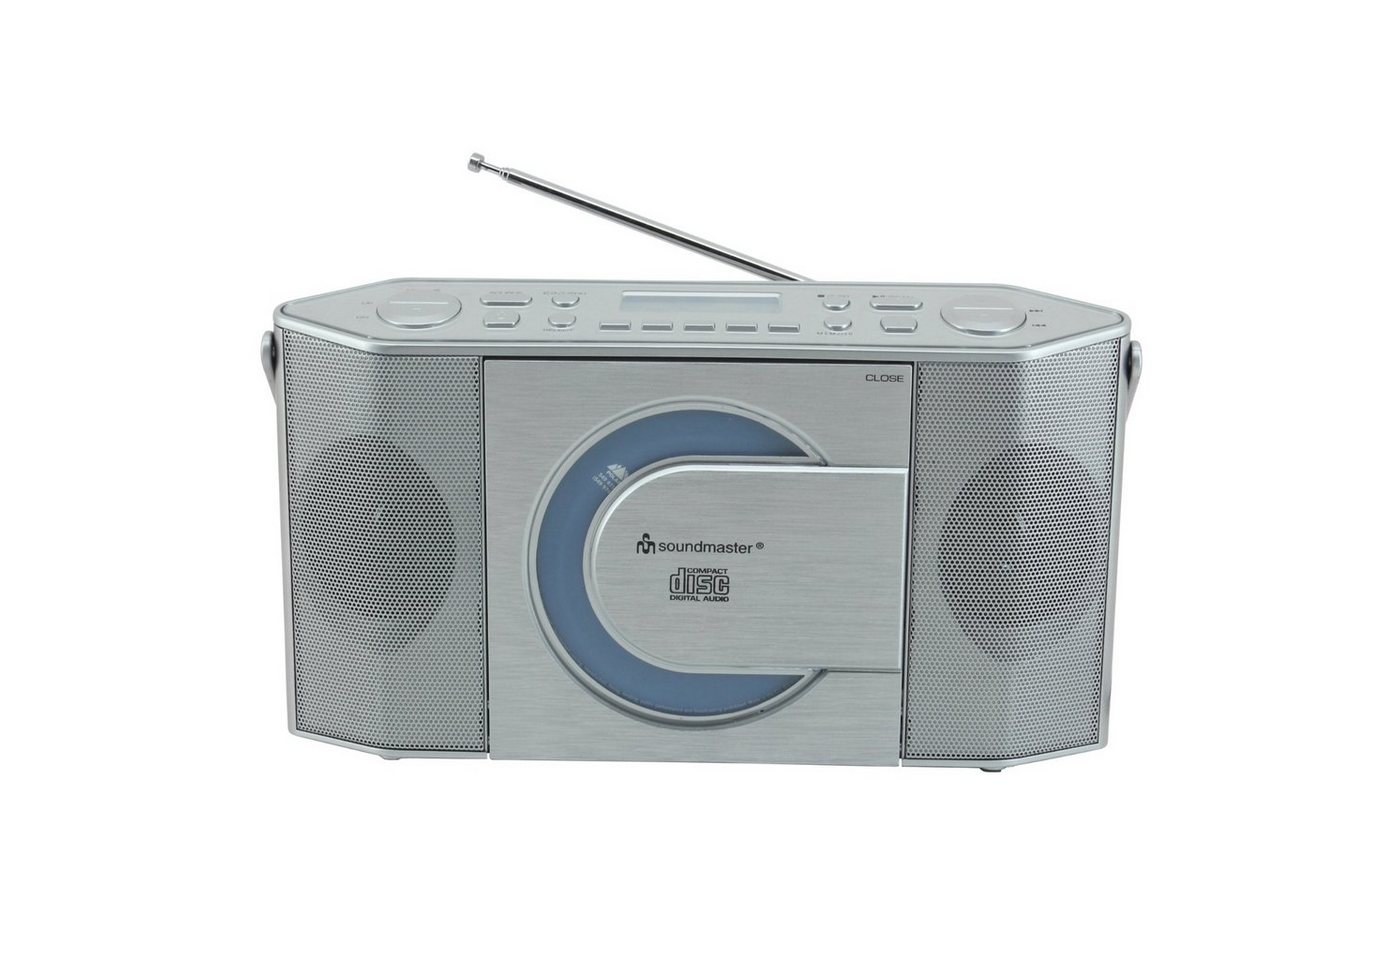 Soundmaster RCD1770SI tragbares Digitalradio DAB+ UKW-PLL USB CD Player MP3 Uhr Digitalradio (DAB) (DAB+, UKW-RDS, 2 W, schmale Bauweise, kompakt, vertikaler CD-Player, Fensterbank, Küche) von Soundmaster